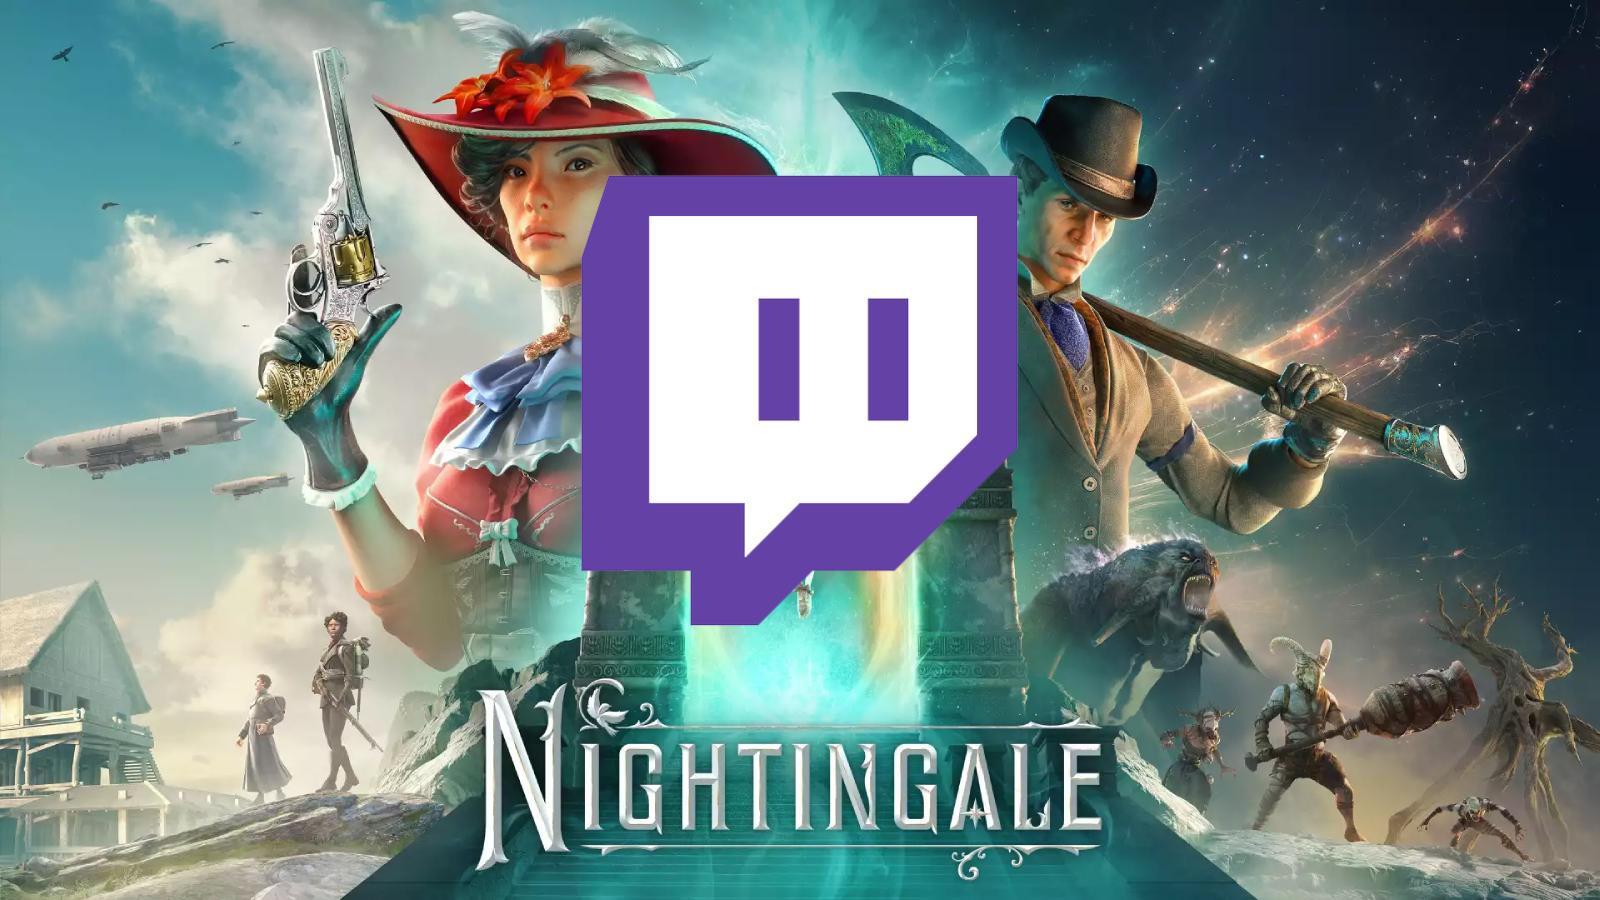 an image of twitch logo on nightingale background